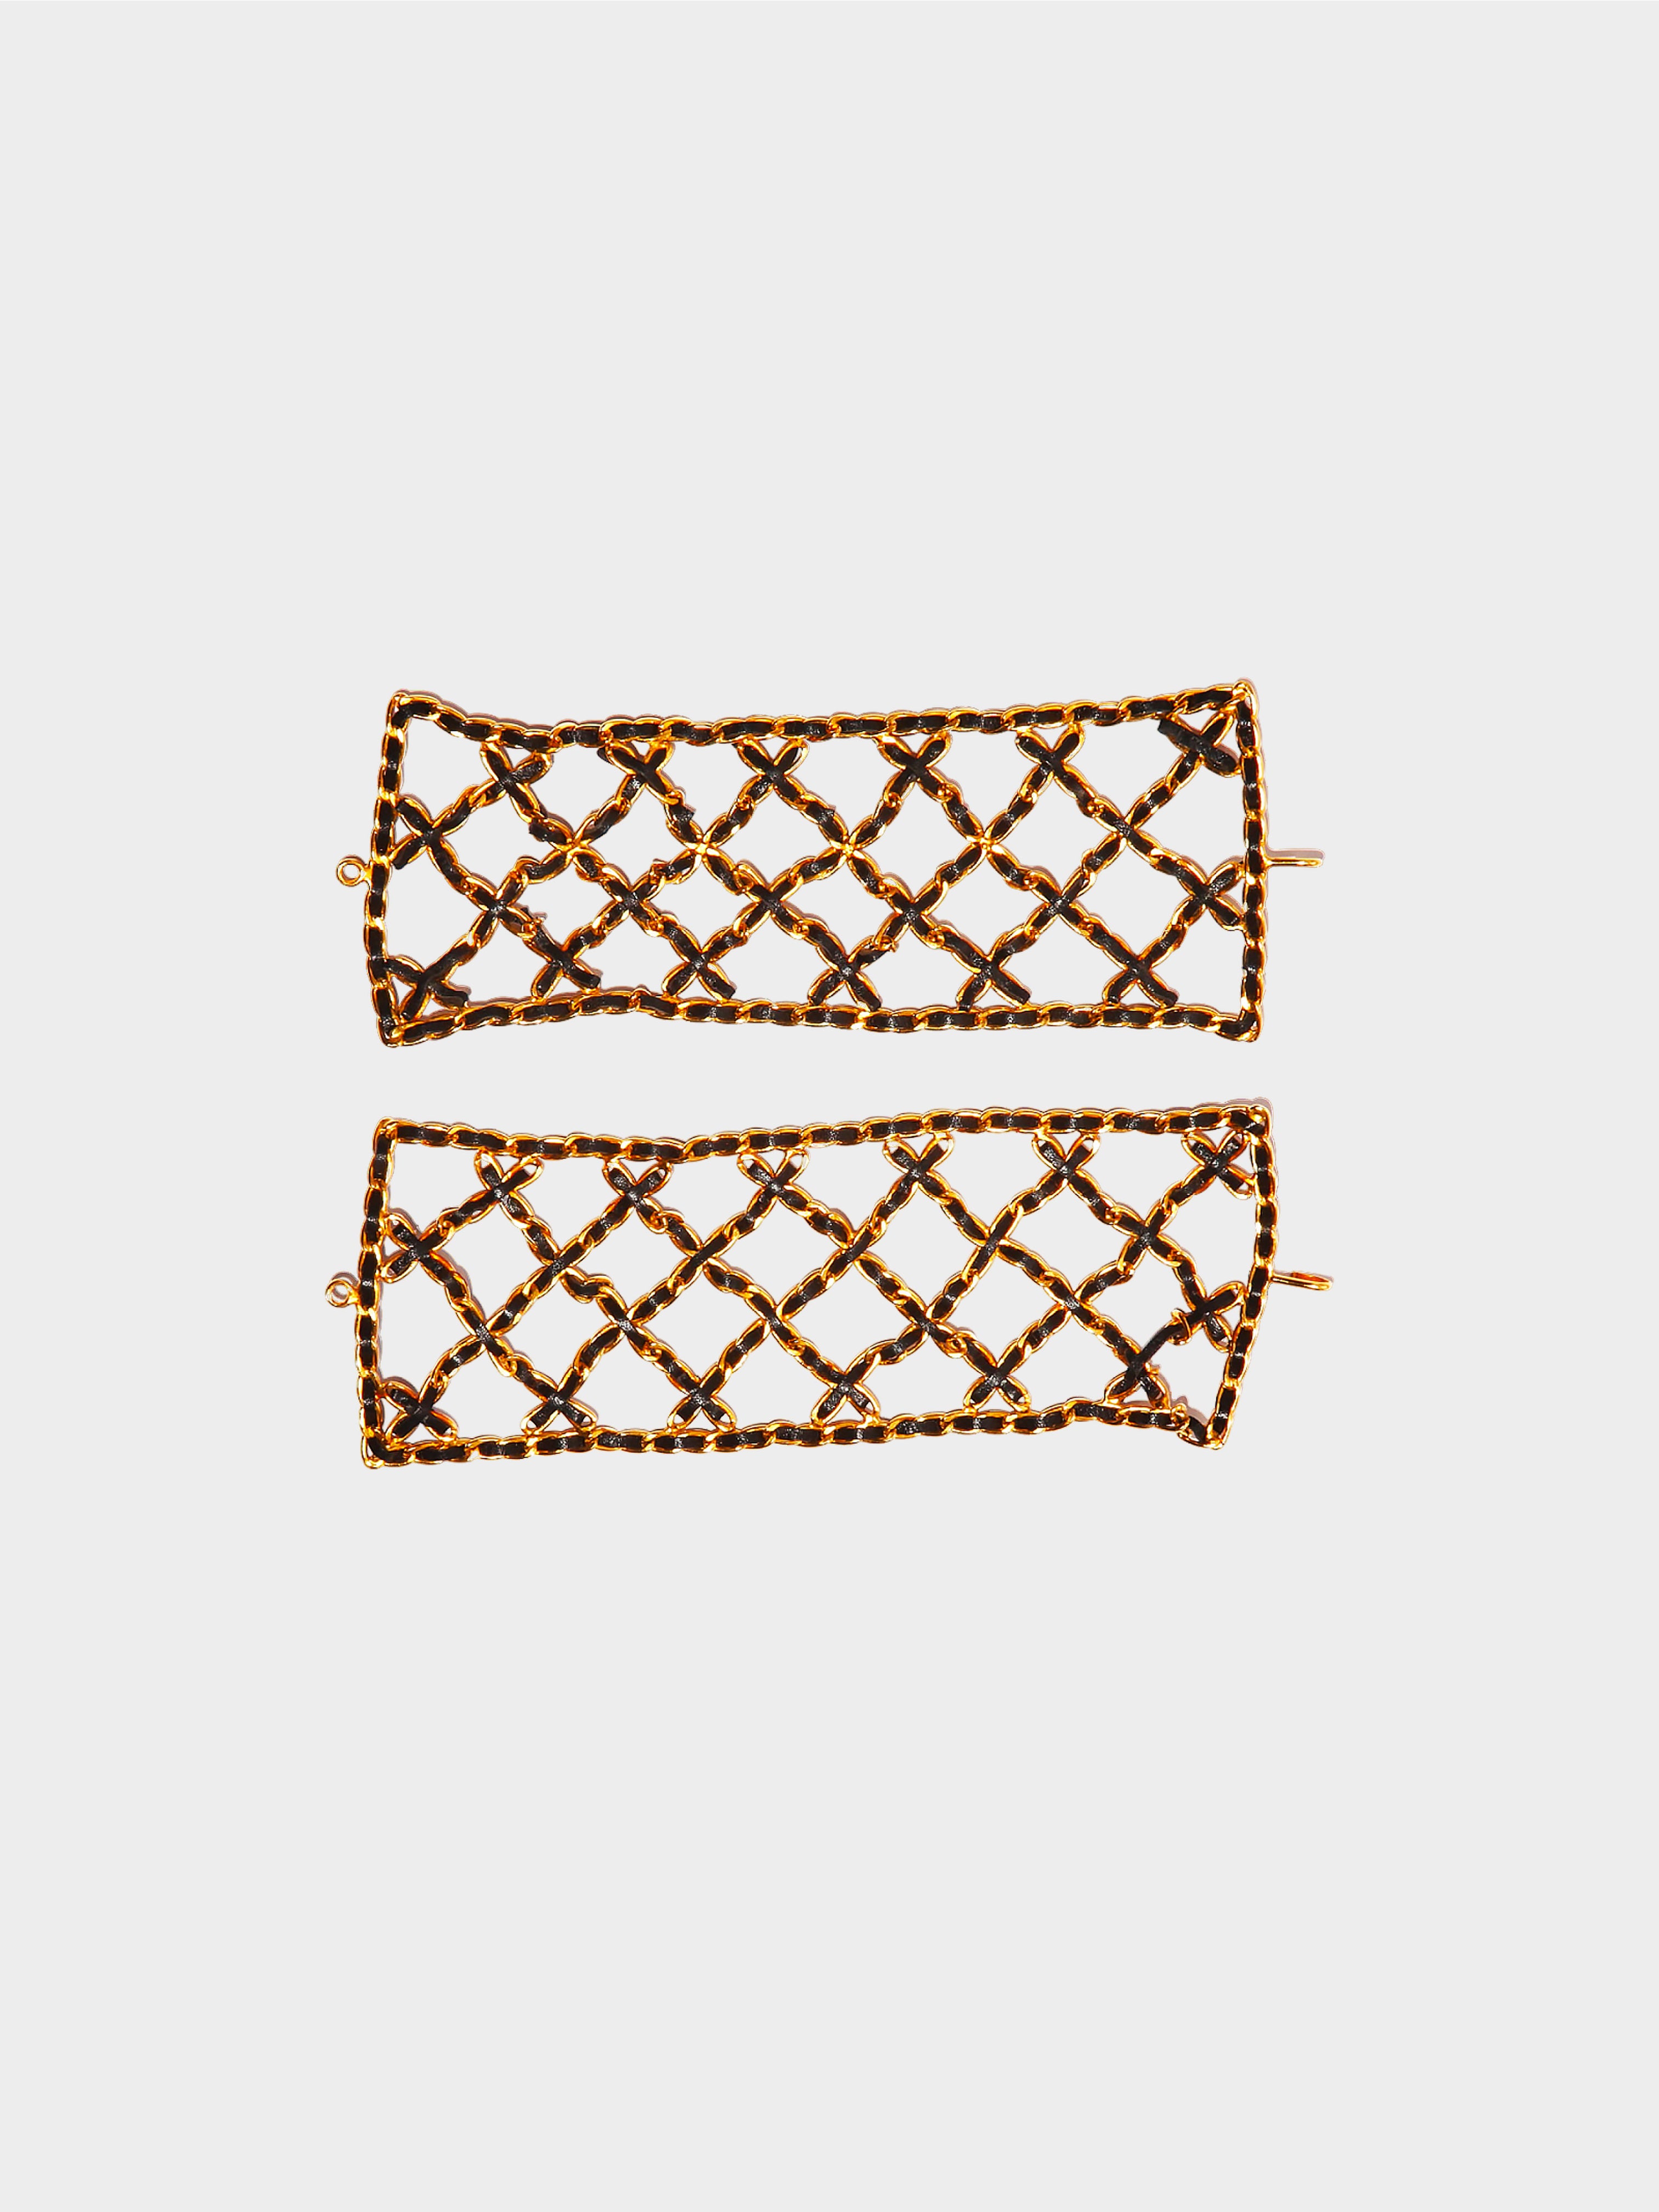 Chanel SS 1995 Rare Leather-Woven Gilt Chain Cuff Bracelets